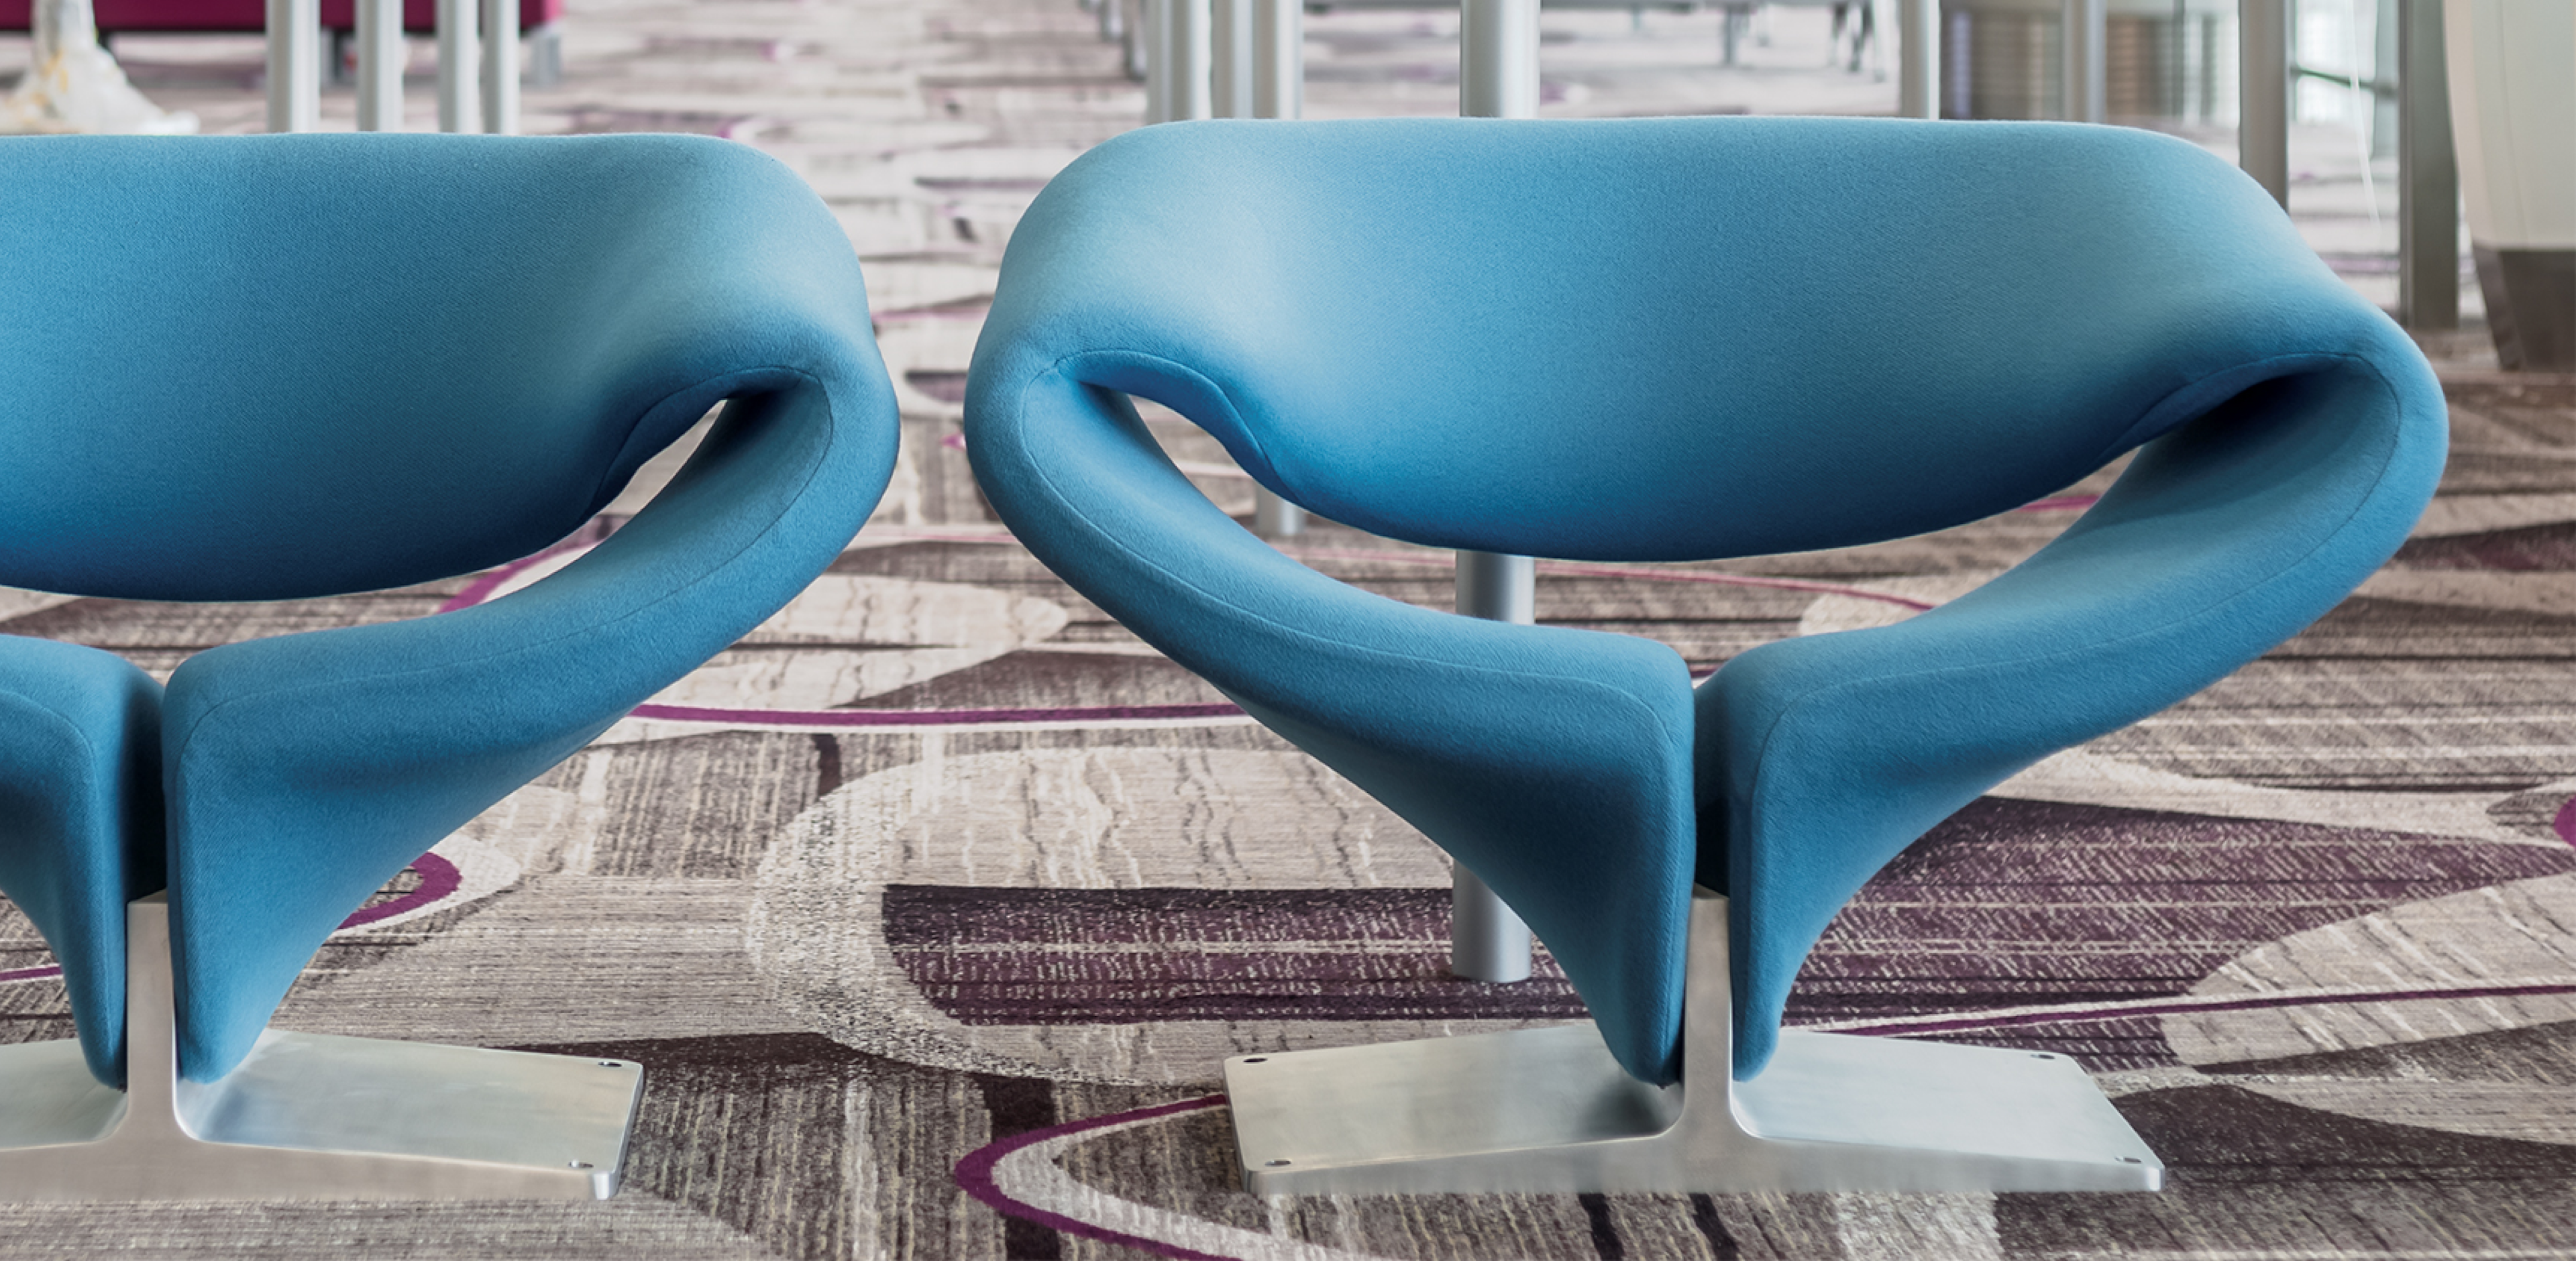 Artifort Ribbon: the designer of this chair deserves a ribbon full image